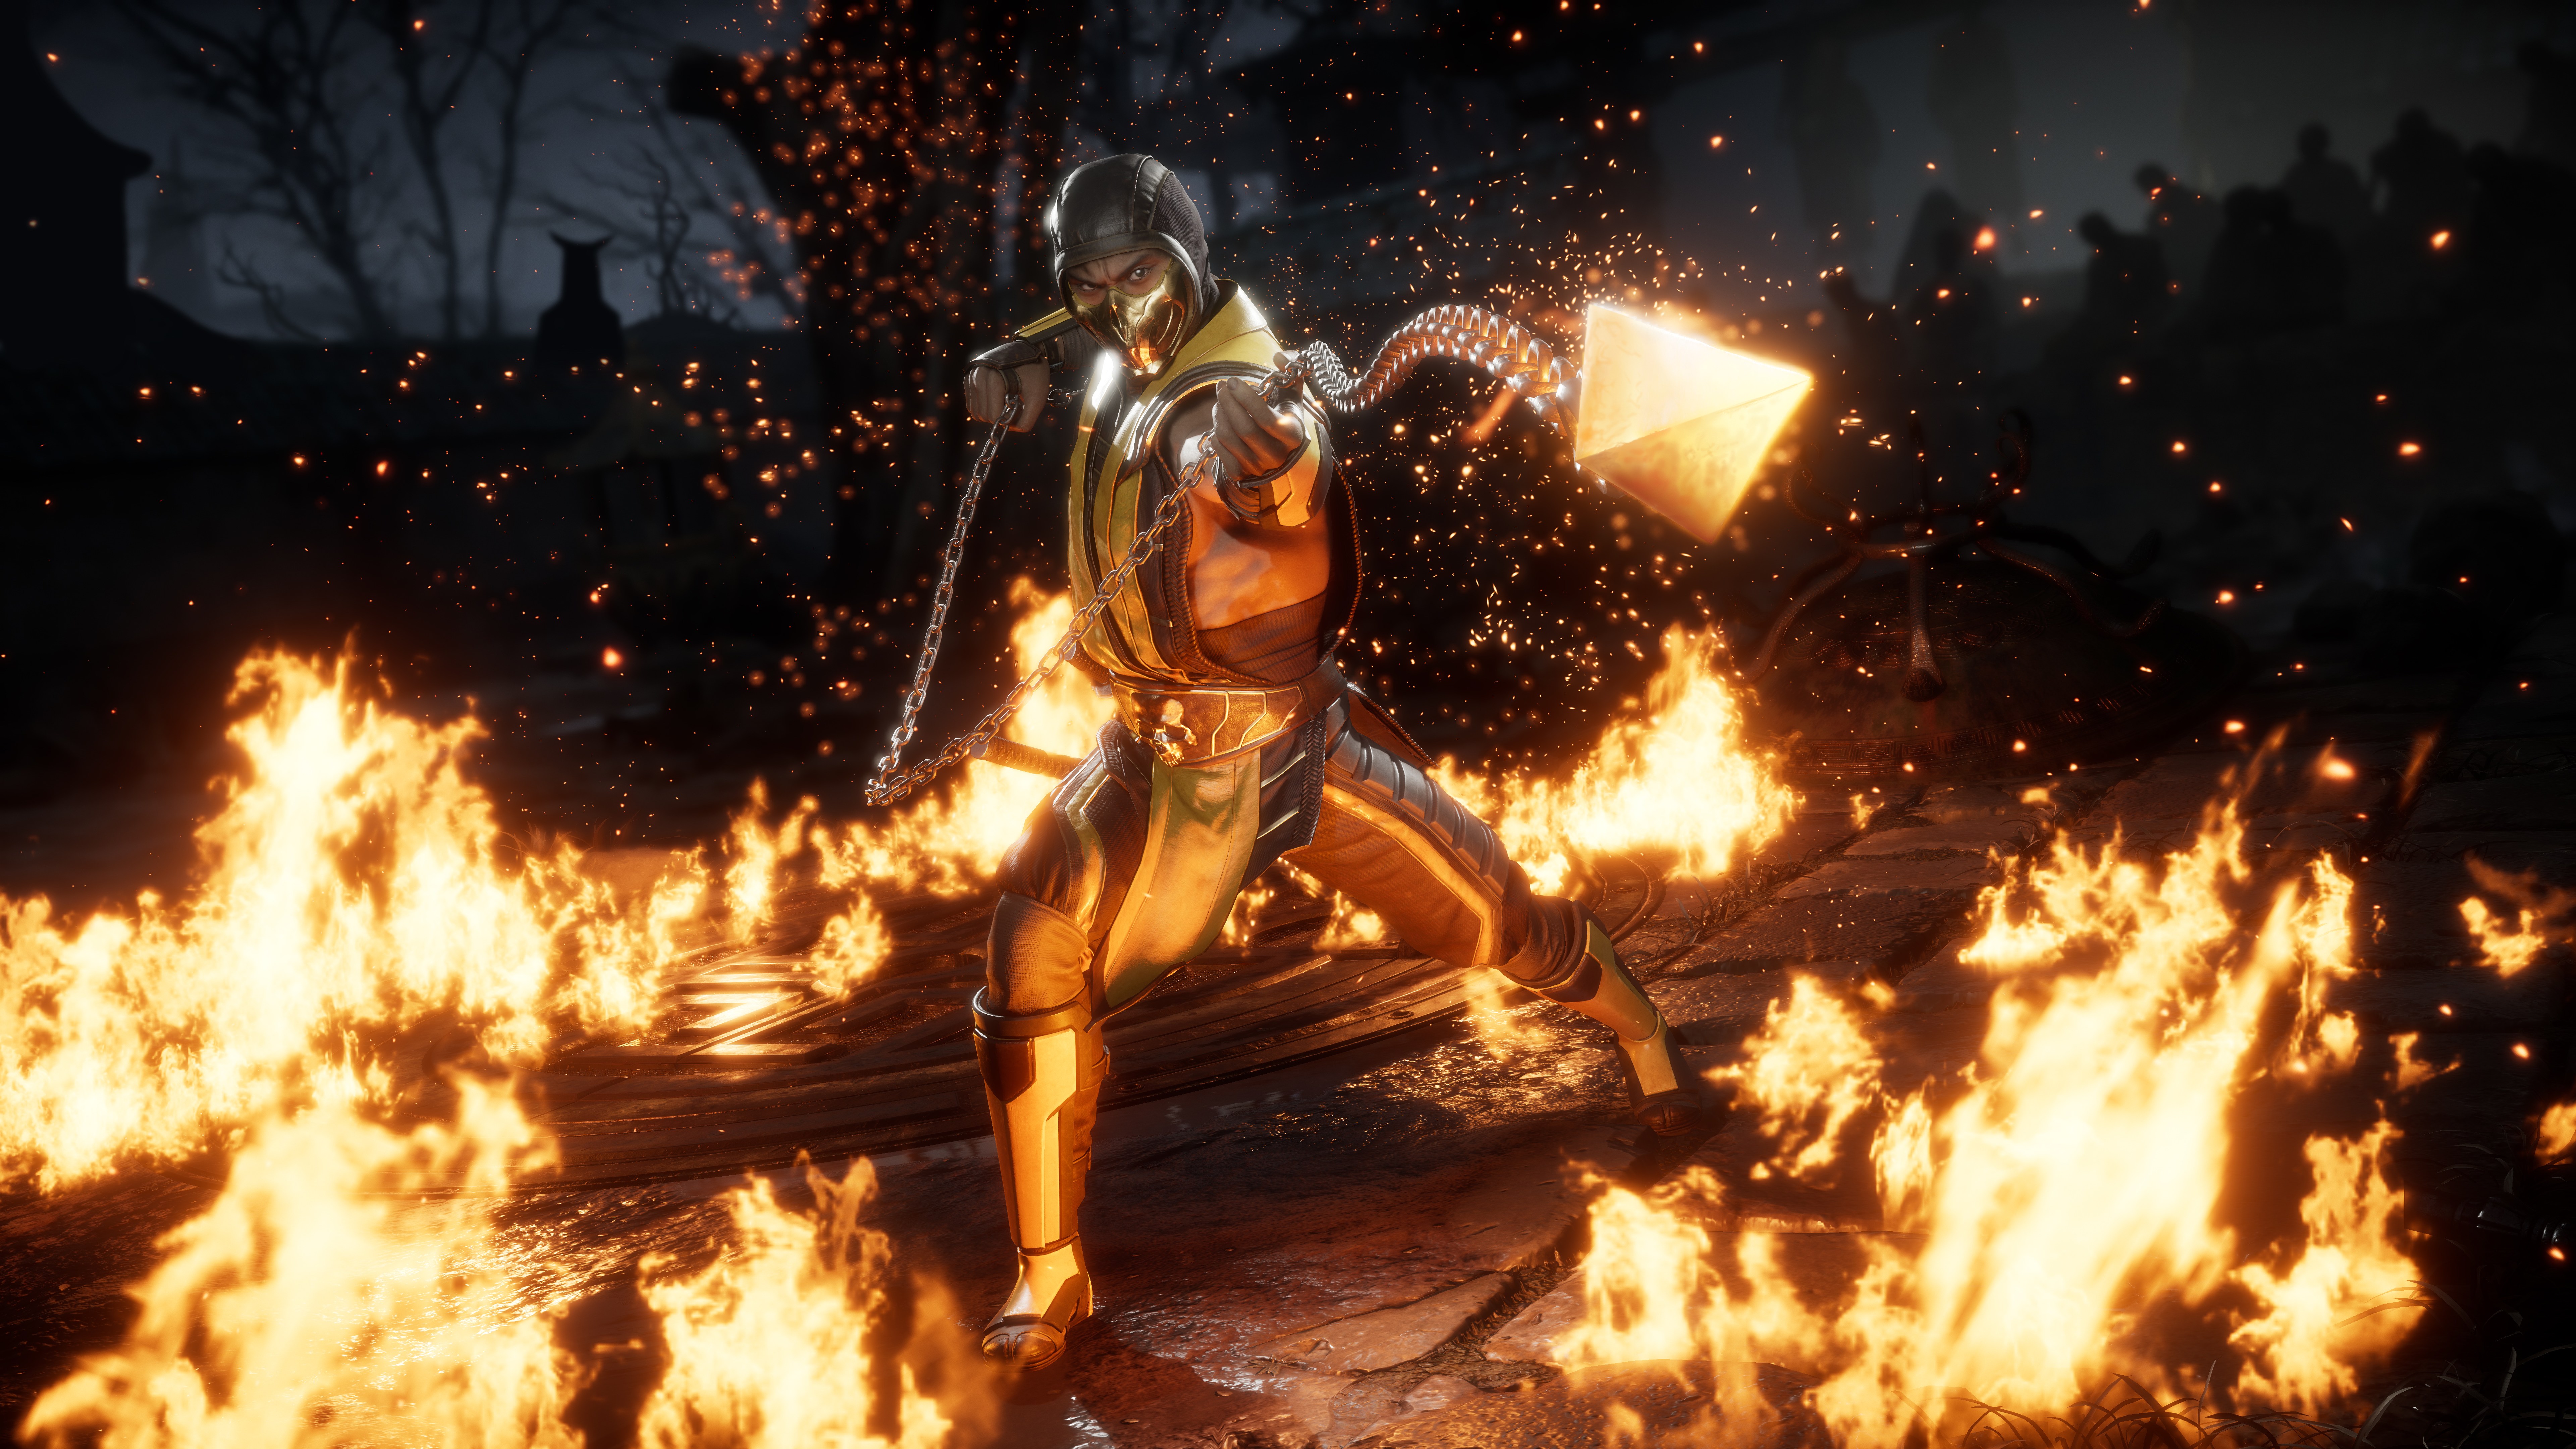 Mortal Kombat 11 wallpaper - Scorpion on fire